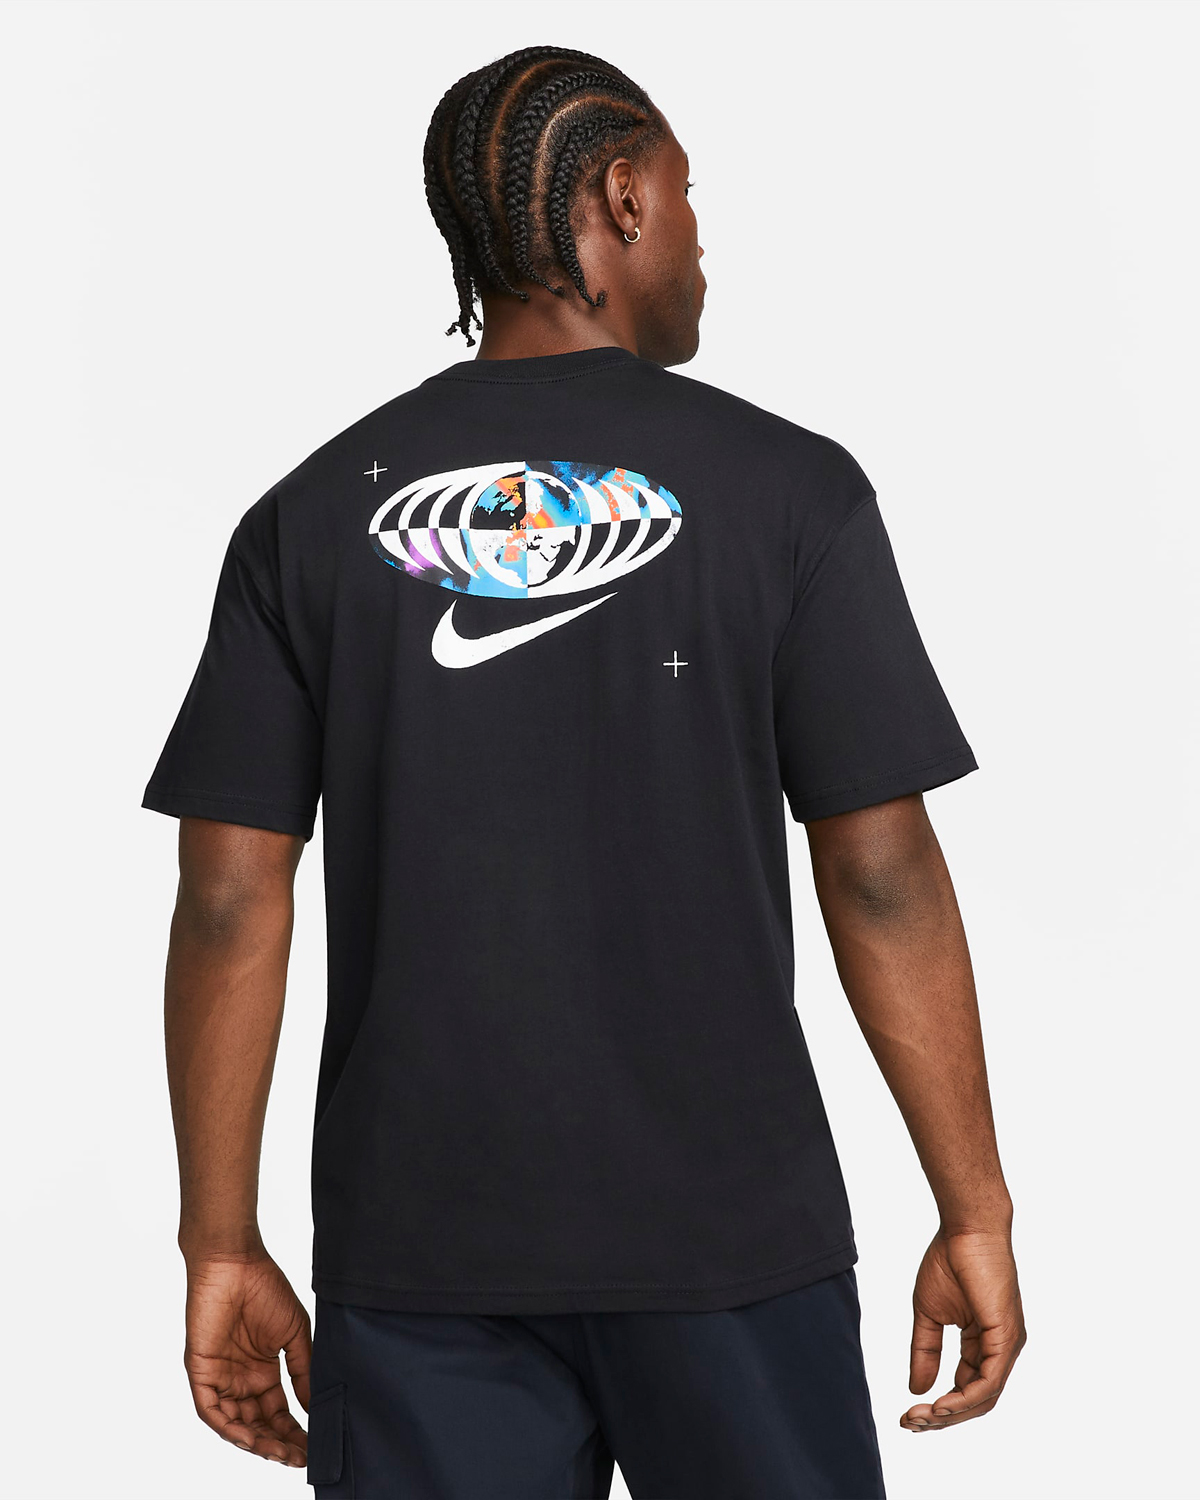 Nike-Sportswear-Max-90-Global-T-Shirt-Black-3